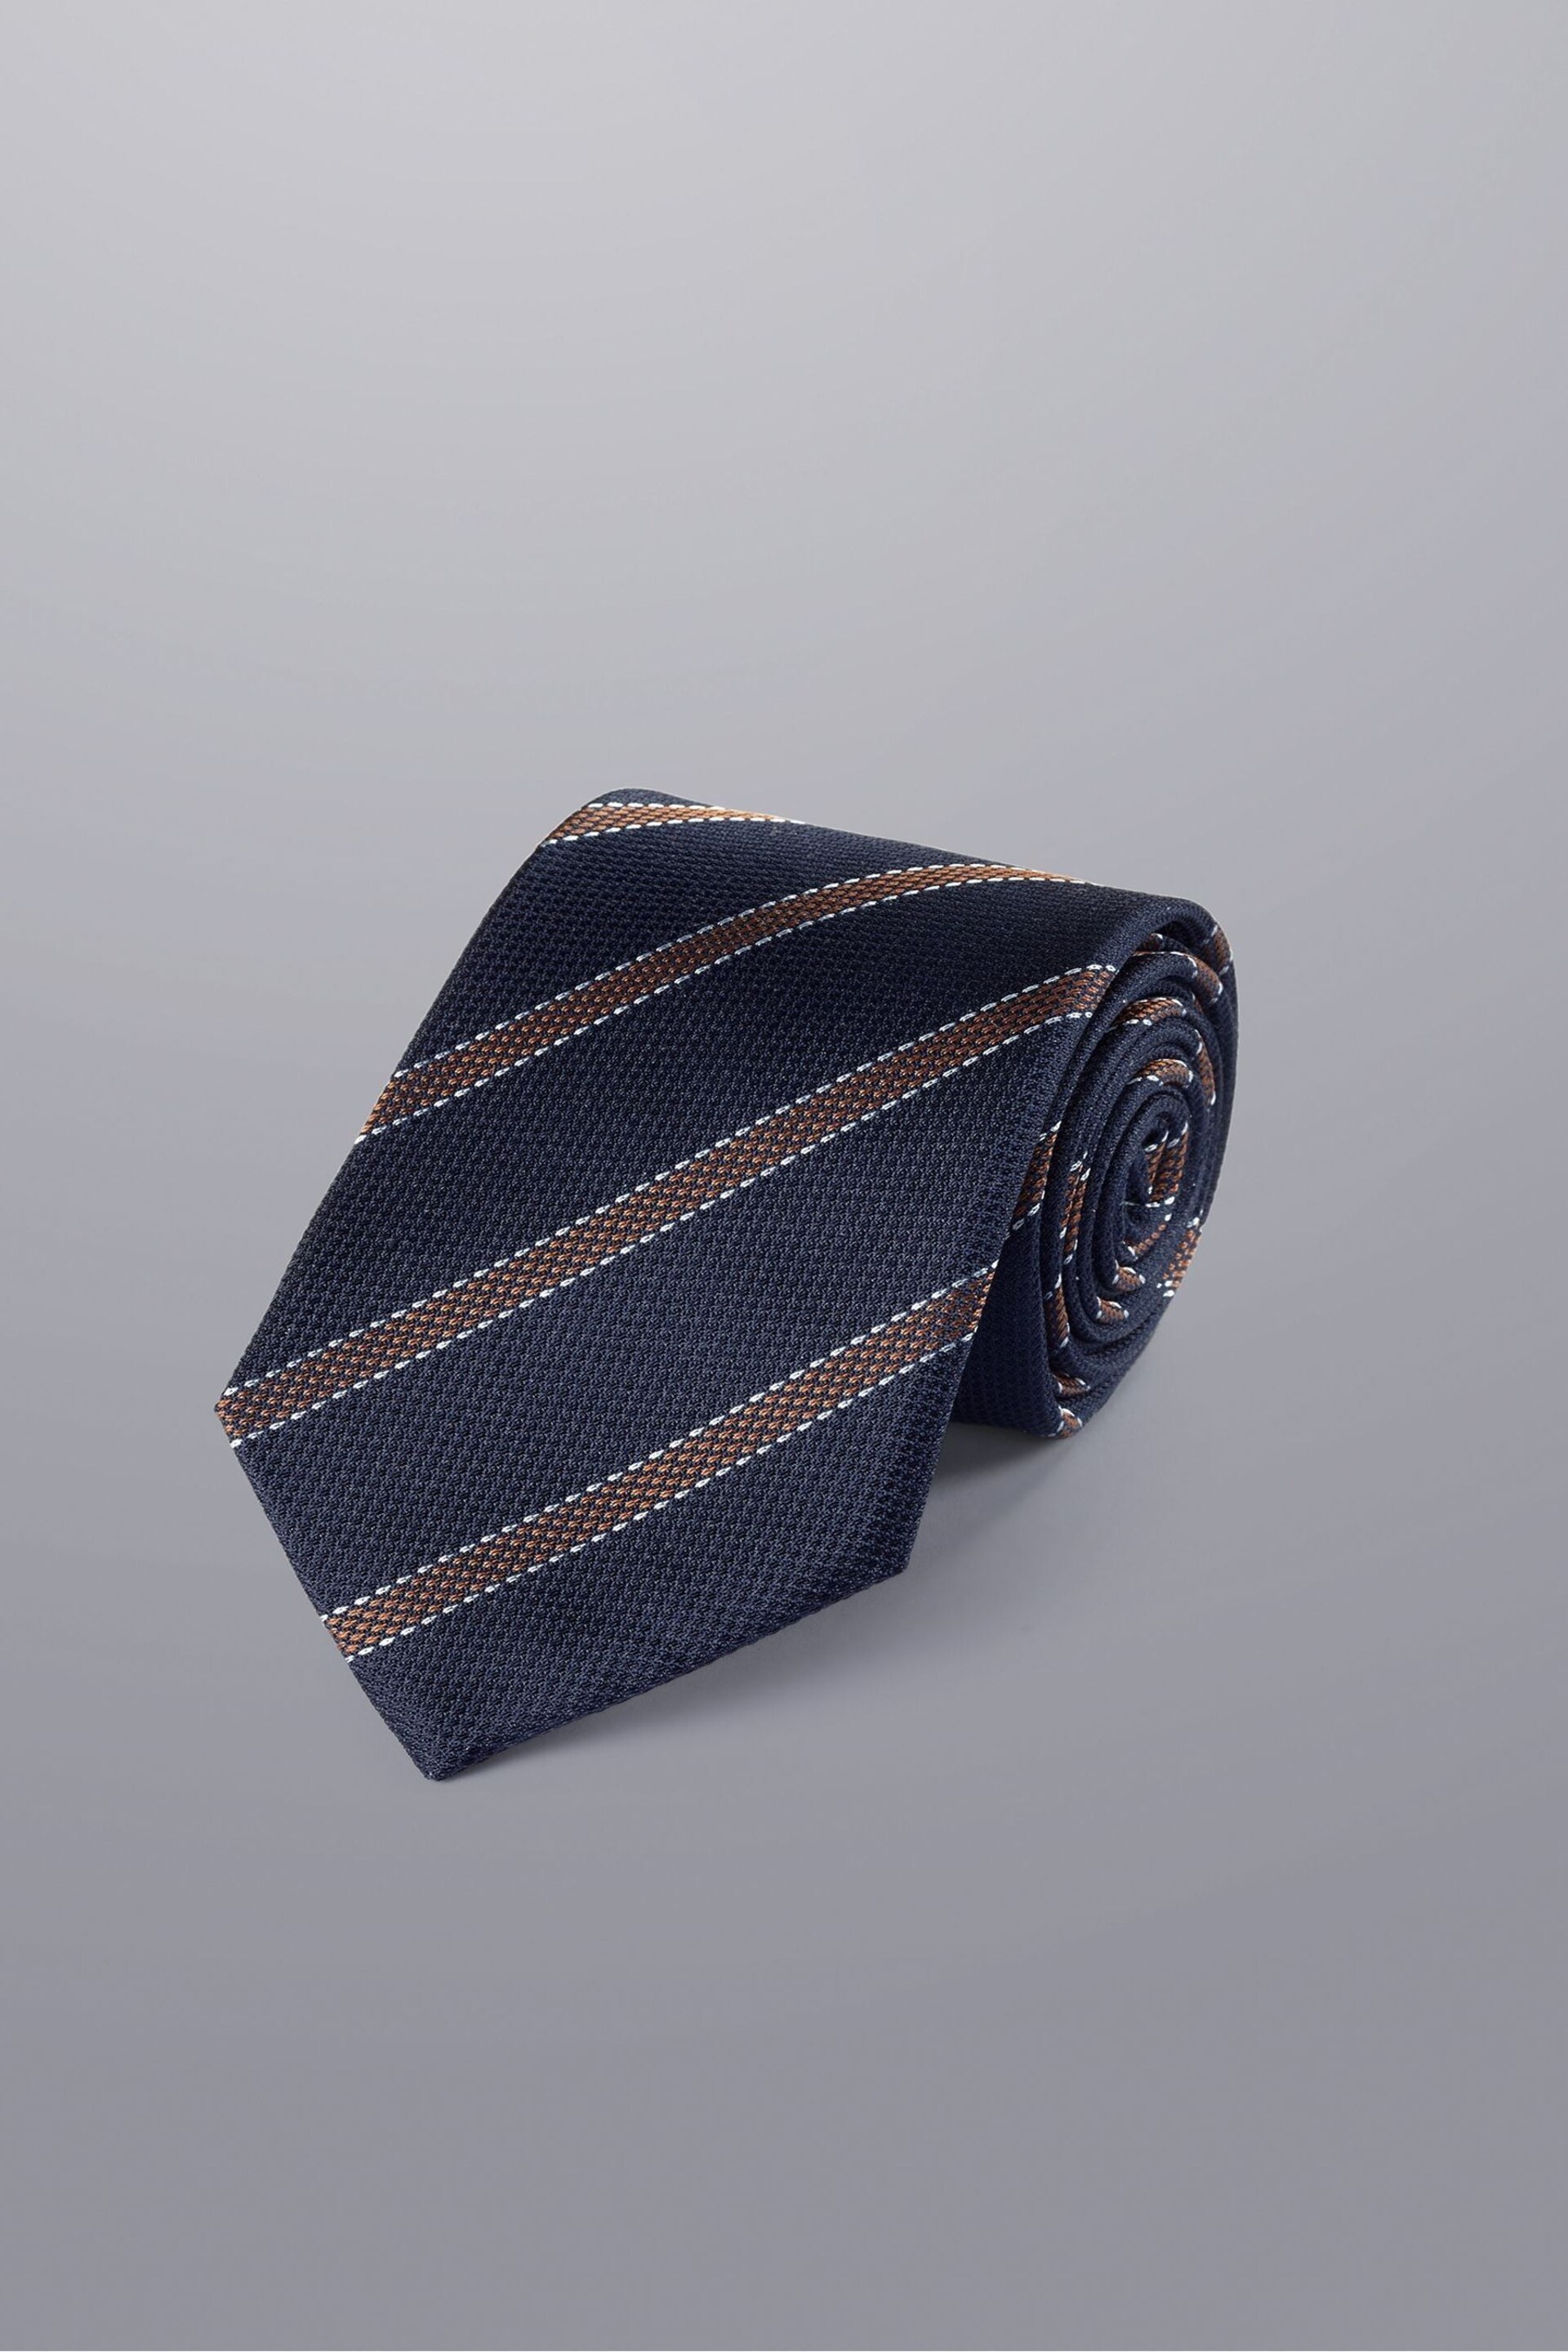 Charles Tyrwhitt Blue Silk Stripe Tie - Image 1 of 2